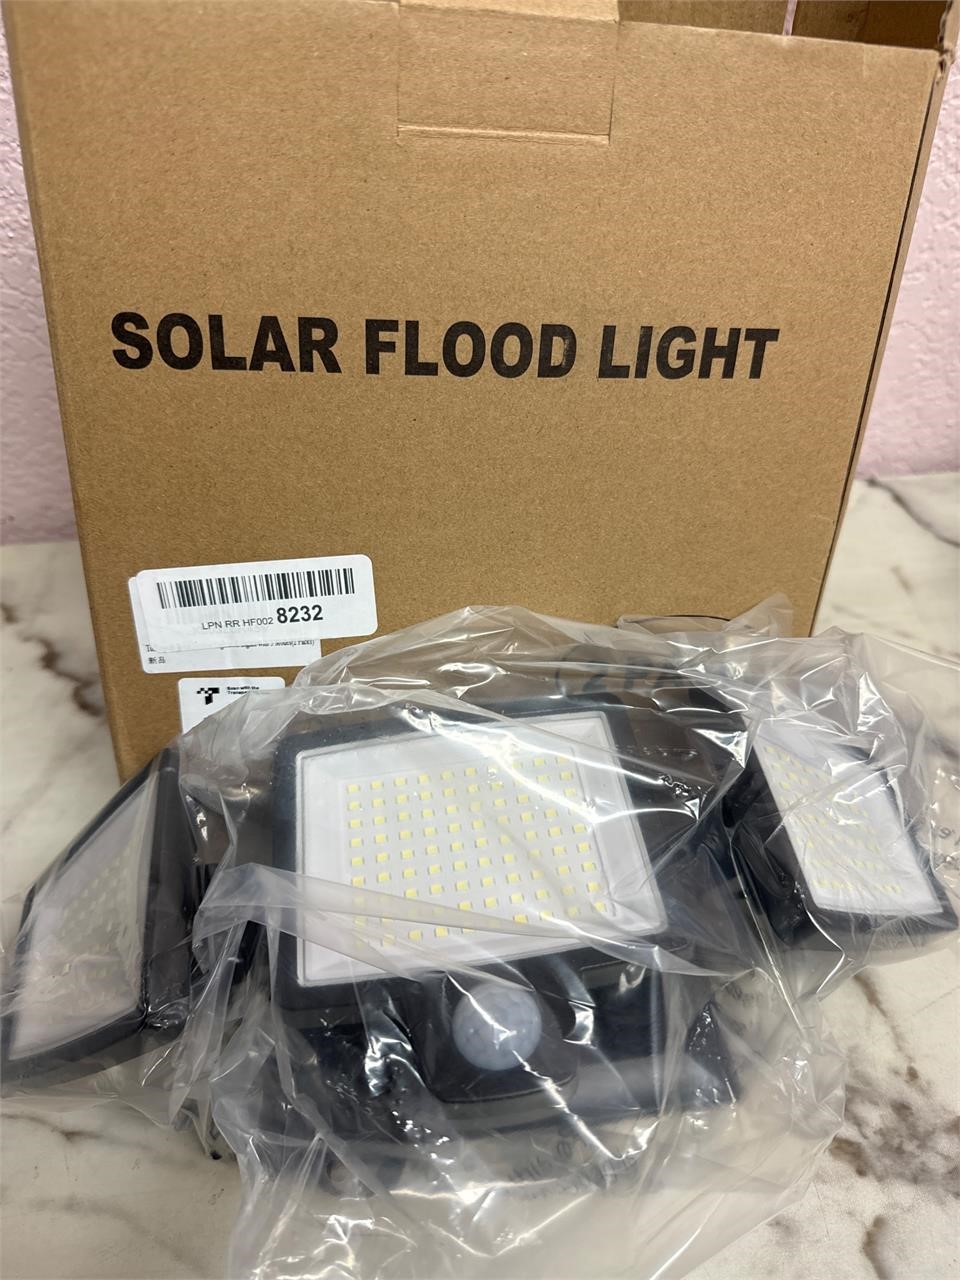 Solar floodlight